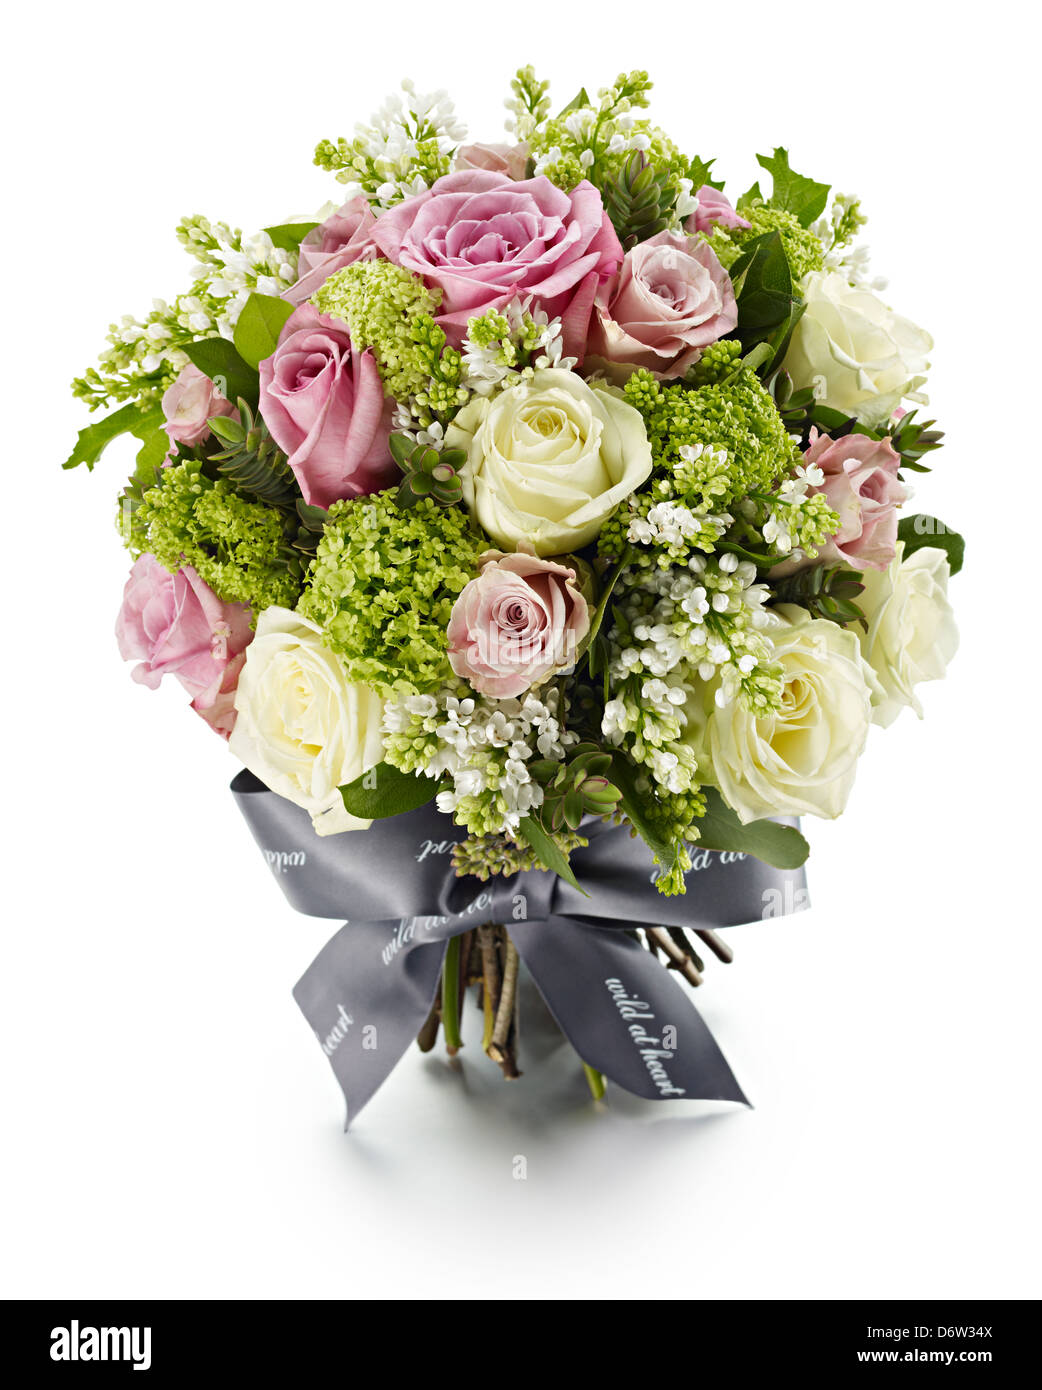 Bouquet de rosas pálidos mixtos Foto de stock